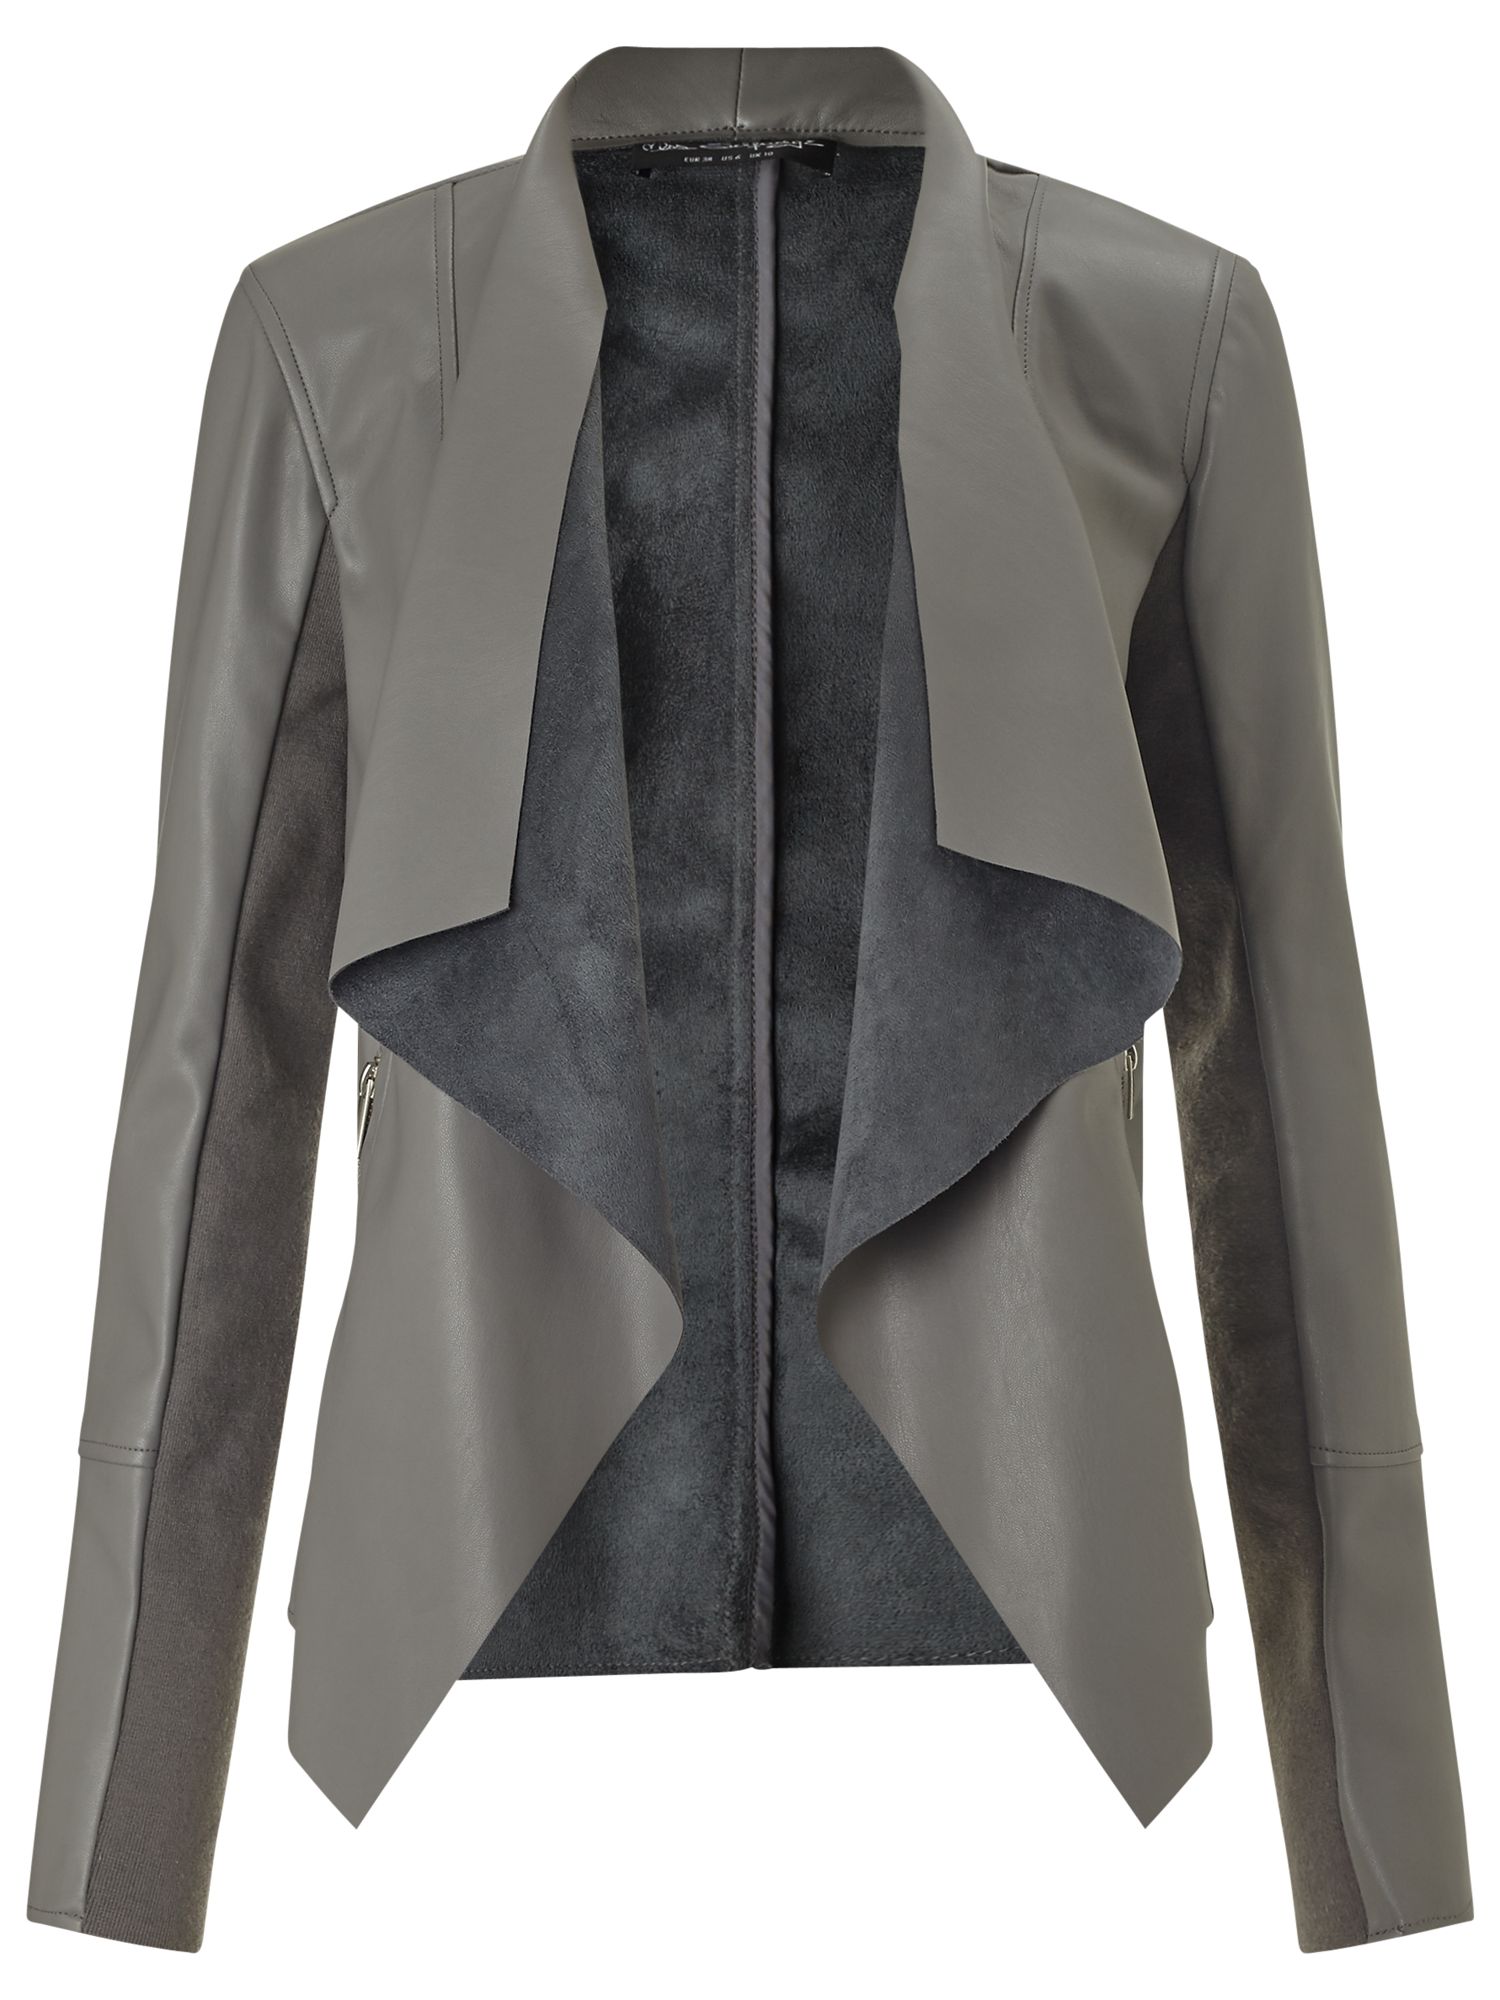 Miss Selfridge Waterfall Jacket, Grey